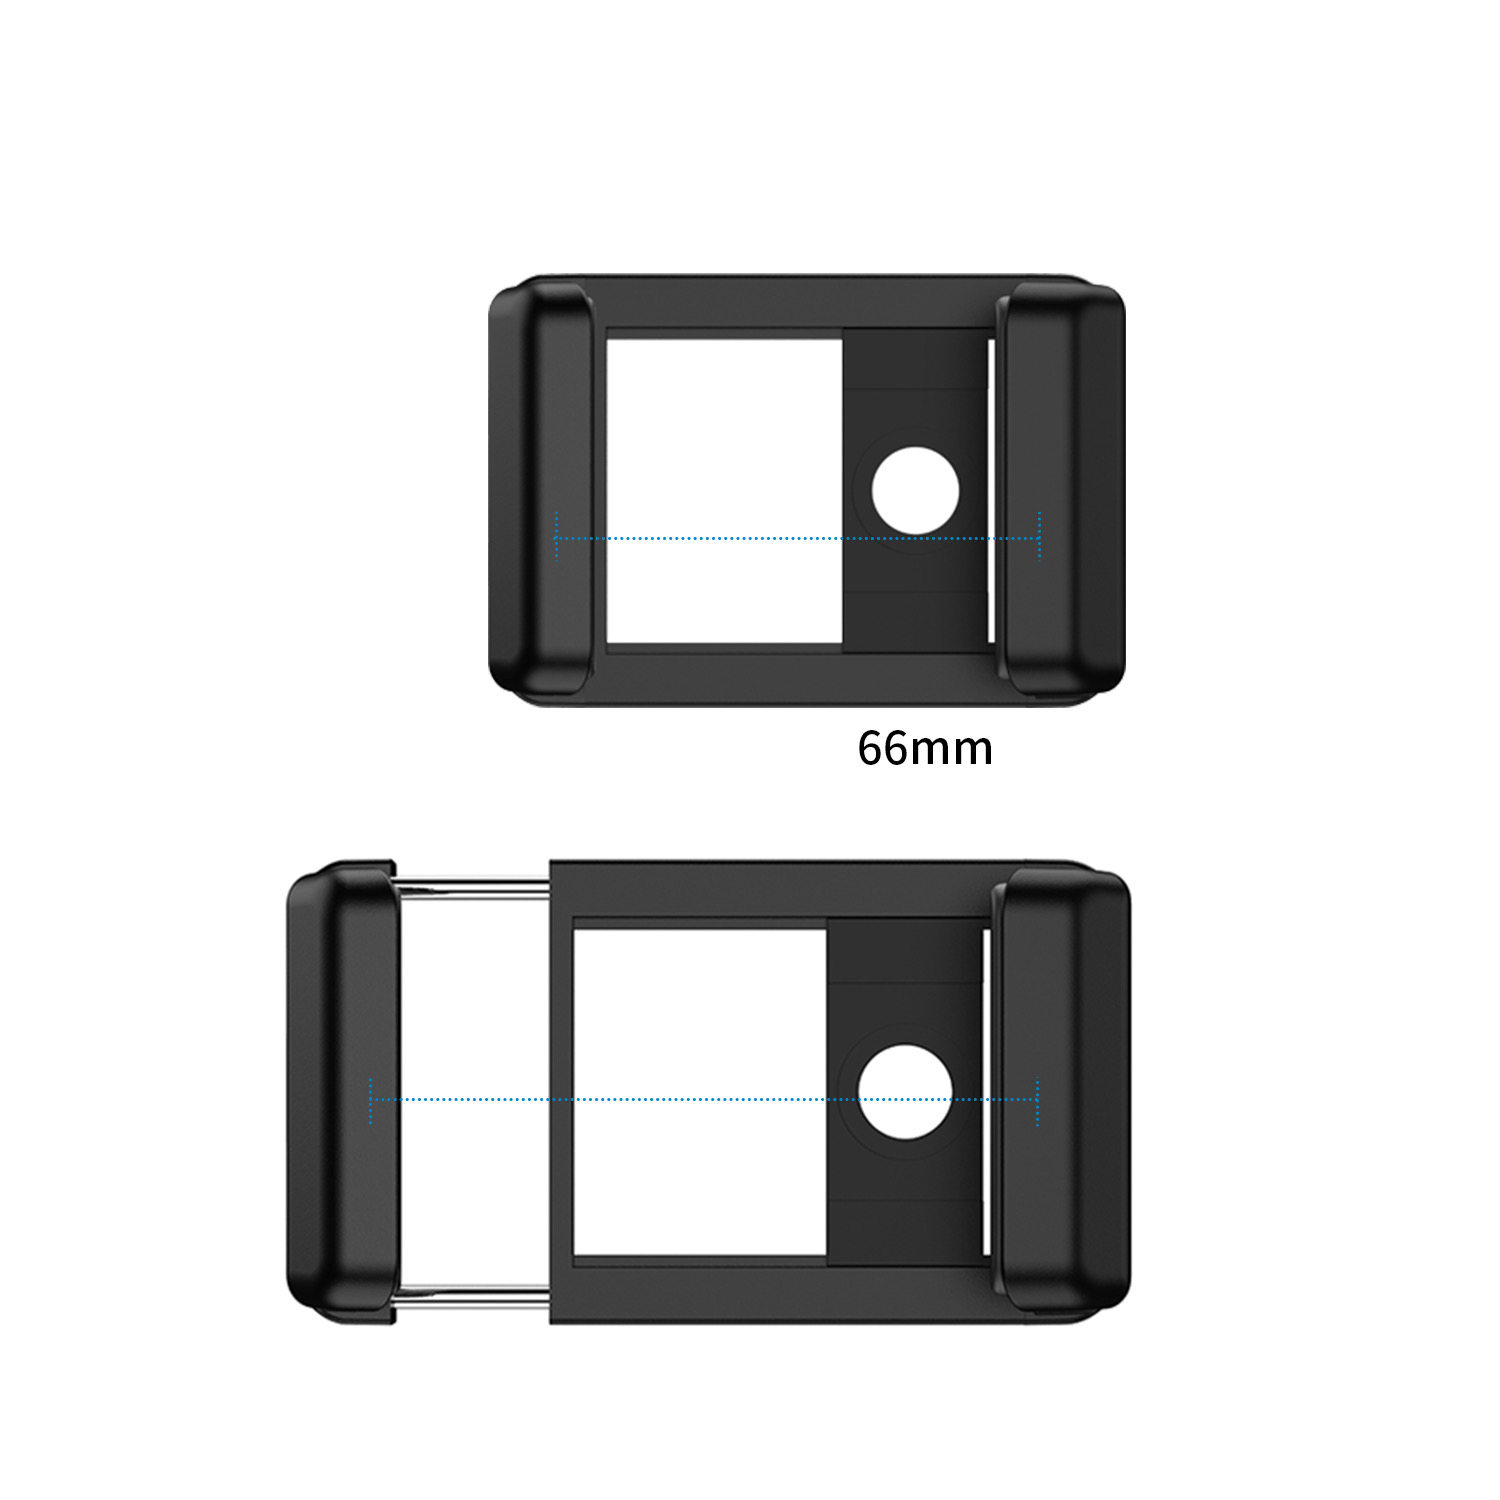 [New] Apexel Adjustable 17mm Mobile Phone Lens Holder